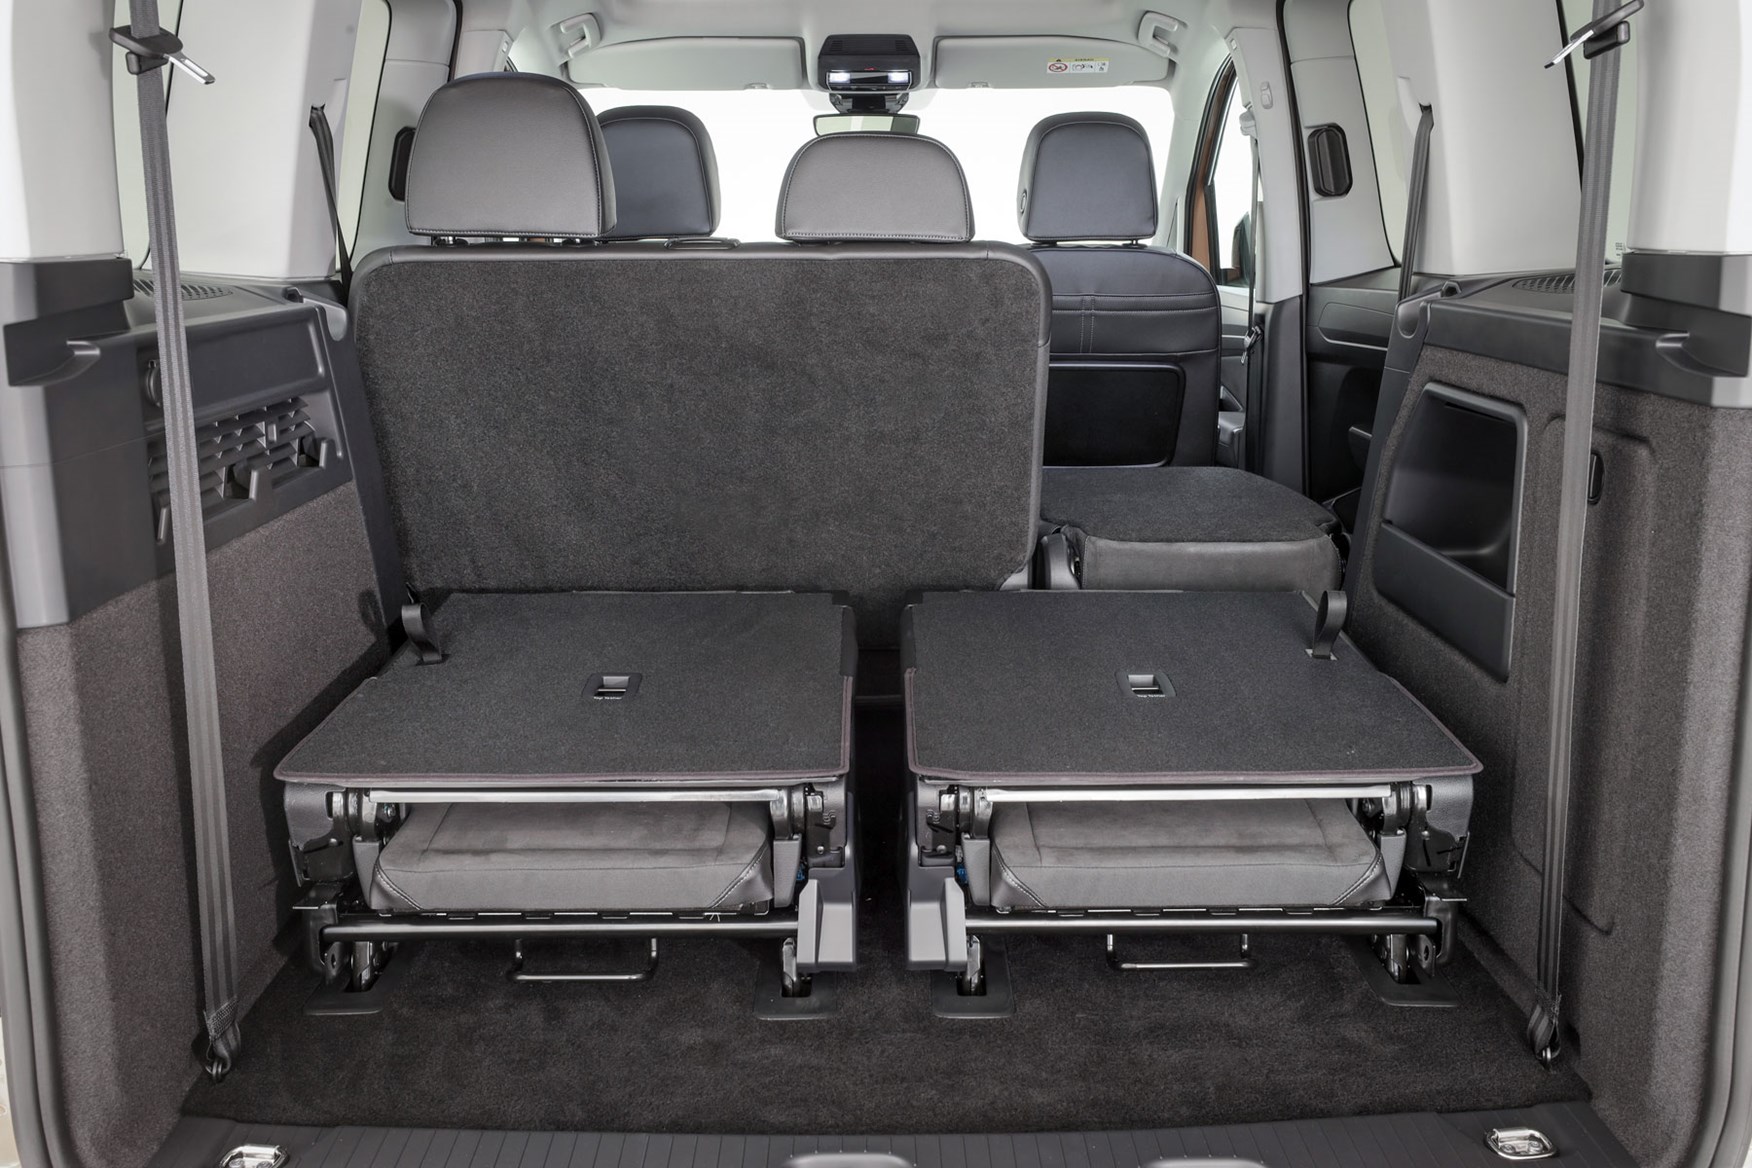 volkswagen caddy seating capacity 7